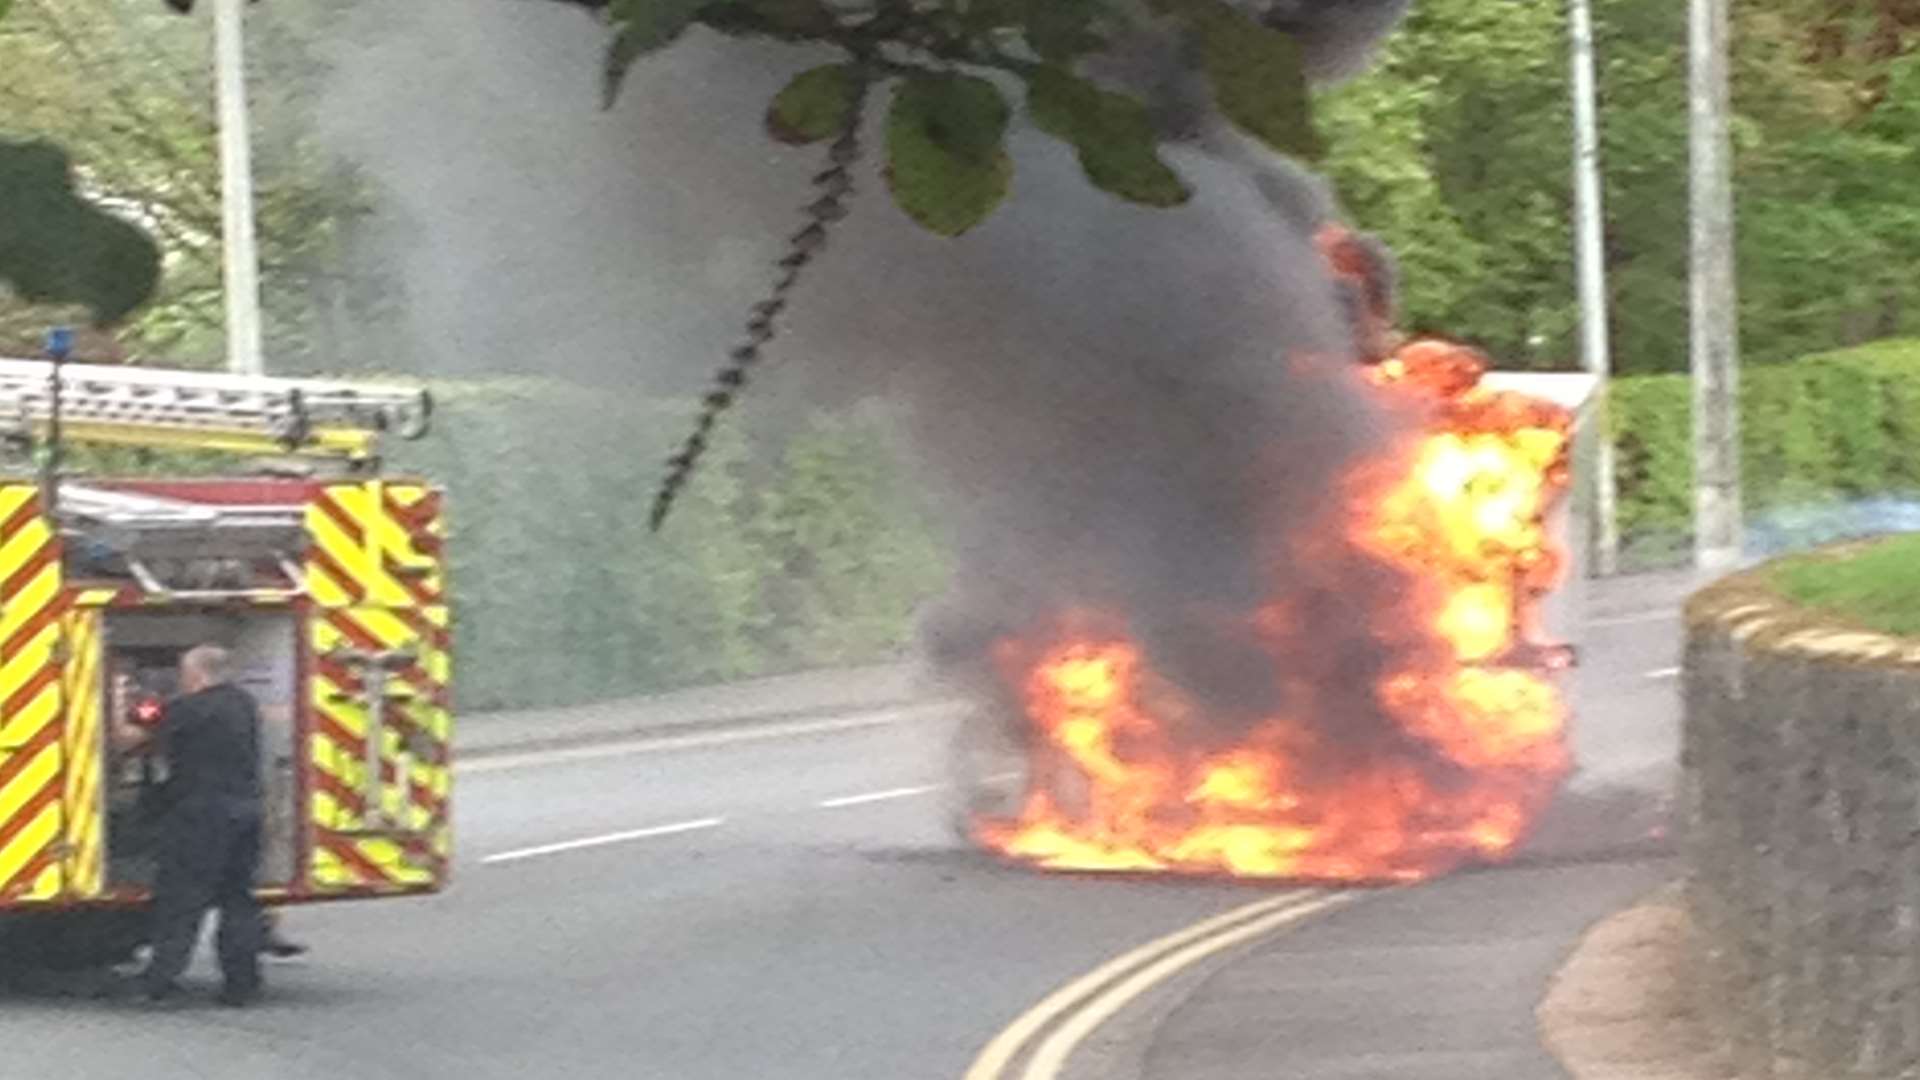 The lorry on fire outside Sevenoaks School. Picture: James Scott